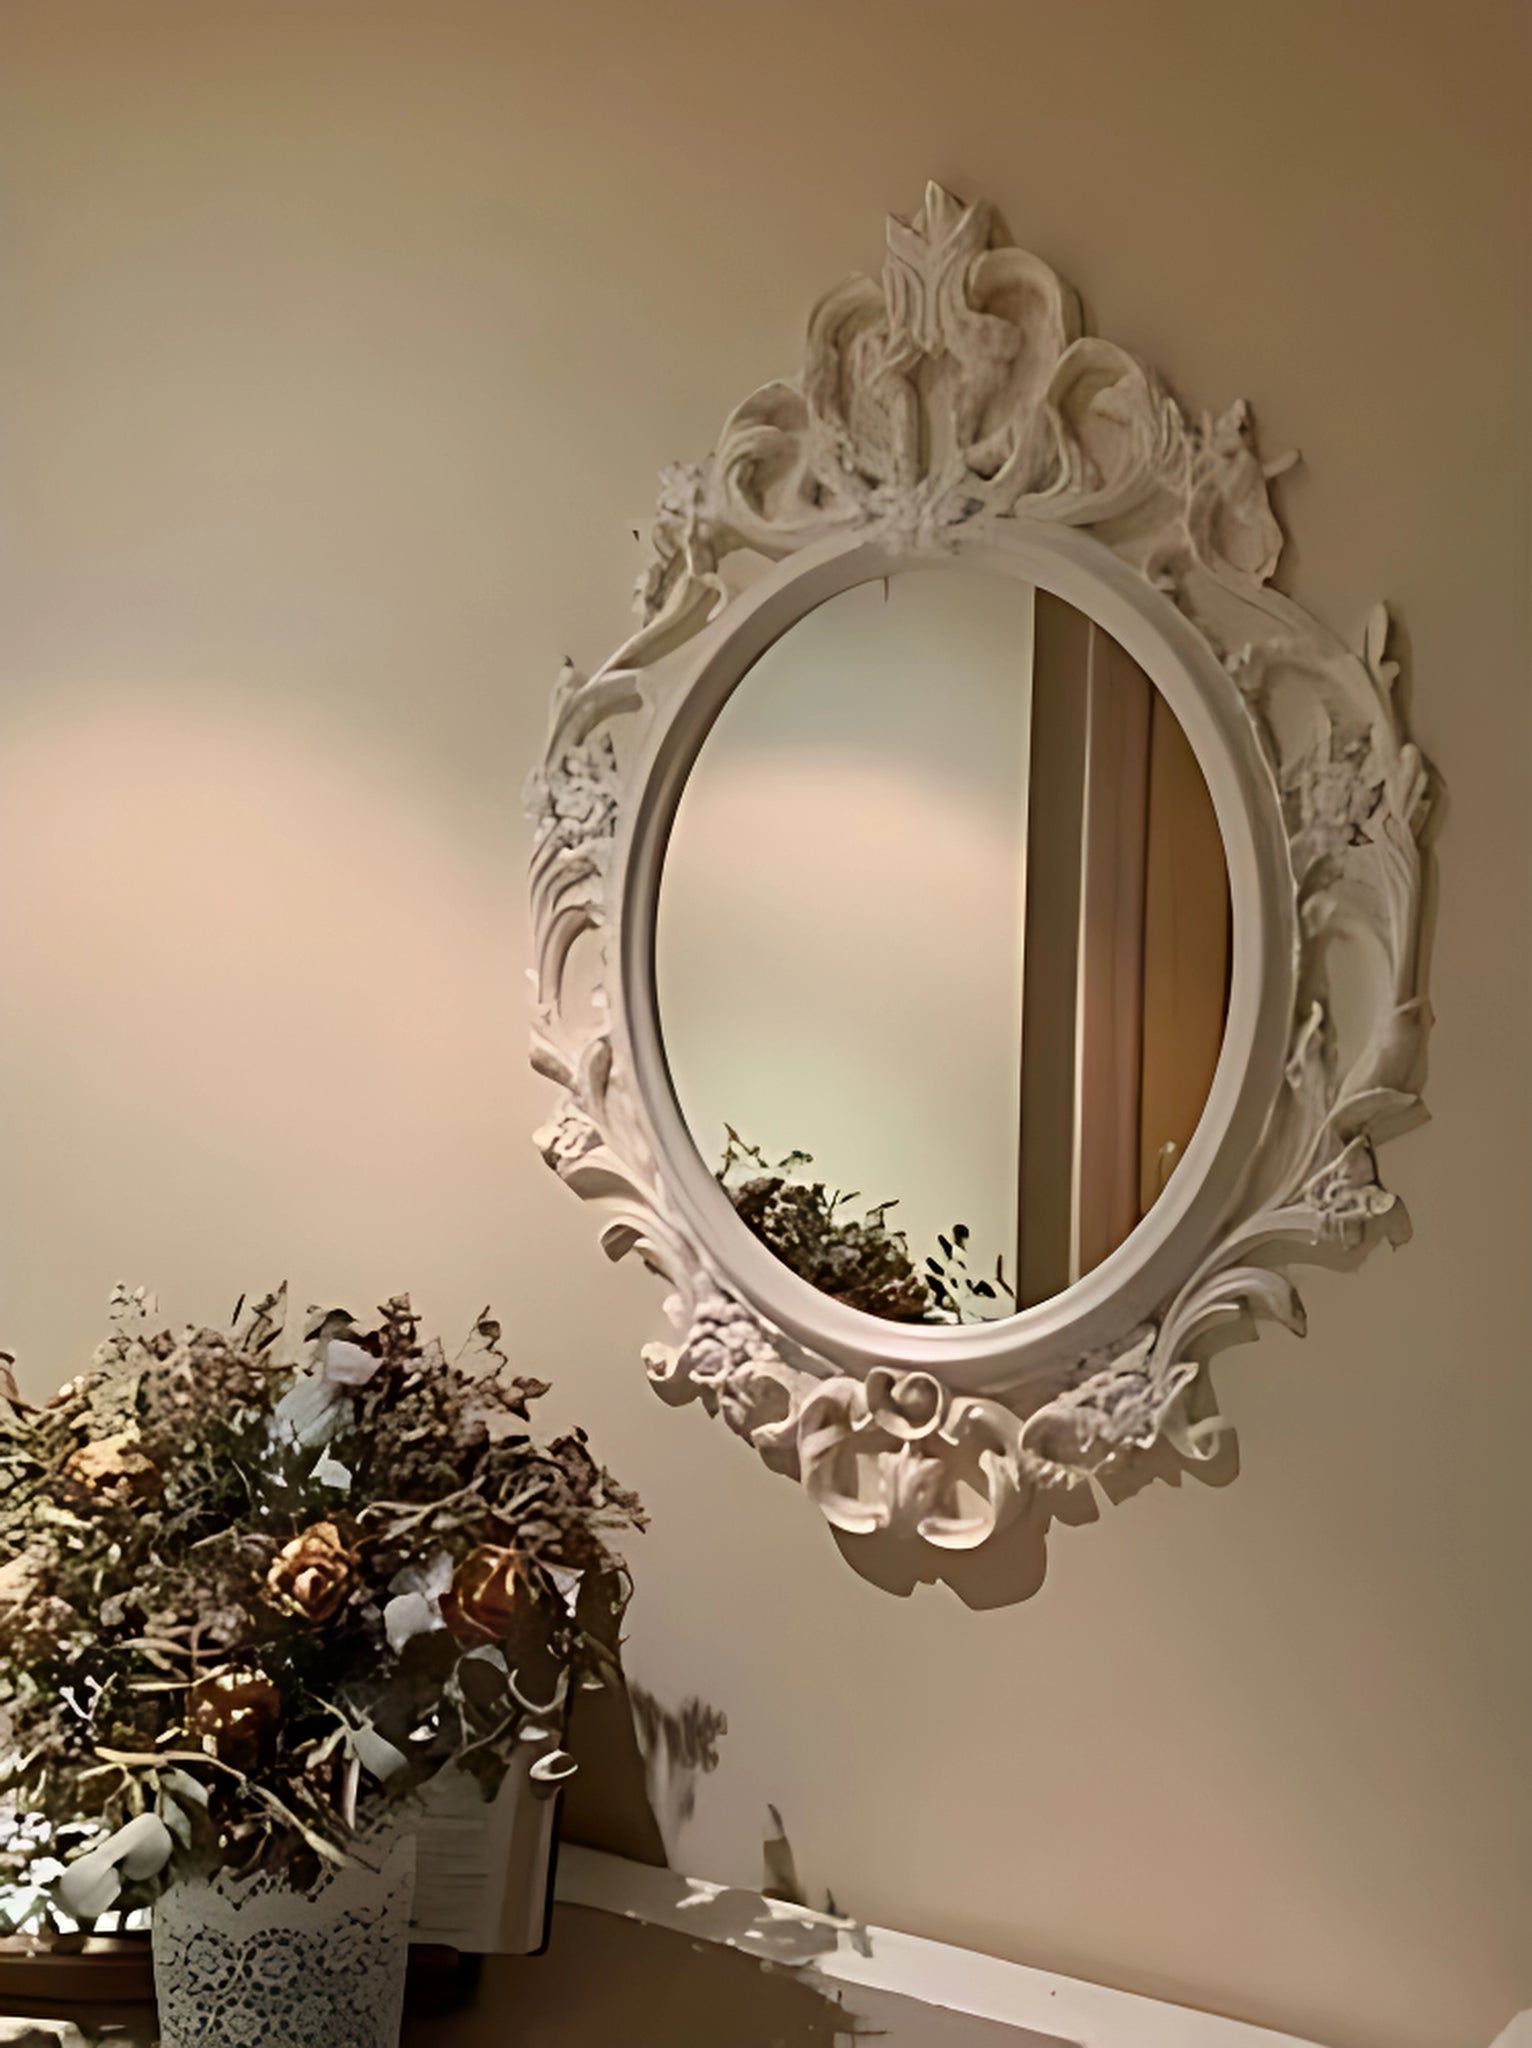 VIKERSUND Wall Mirror, oval/white59x85 cm